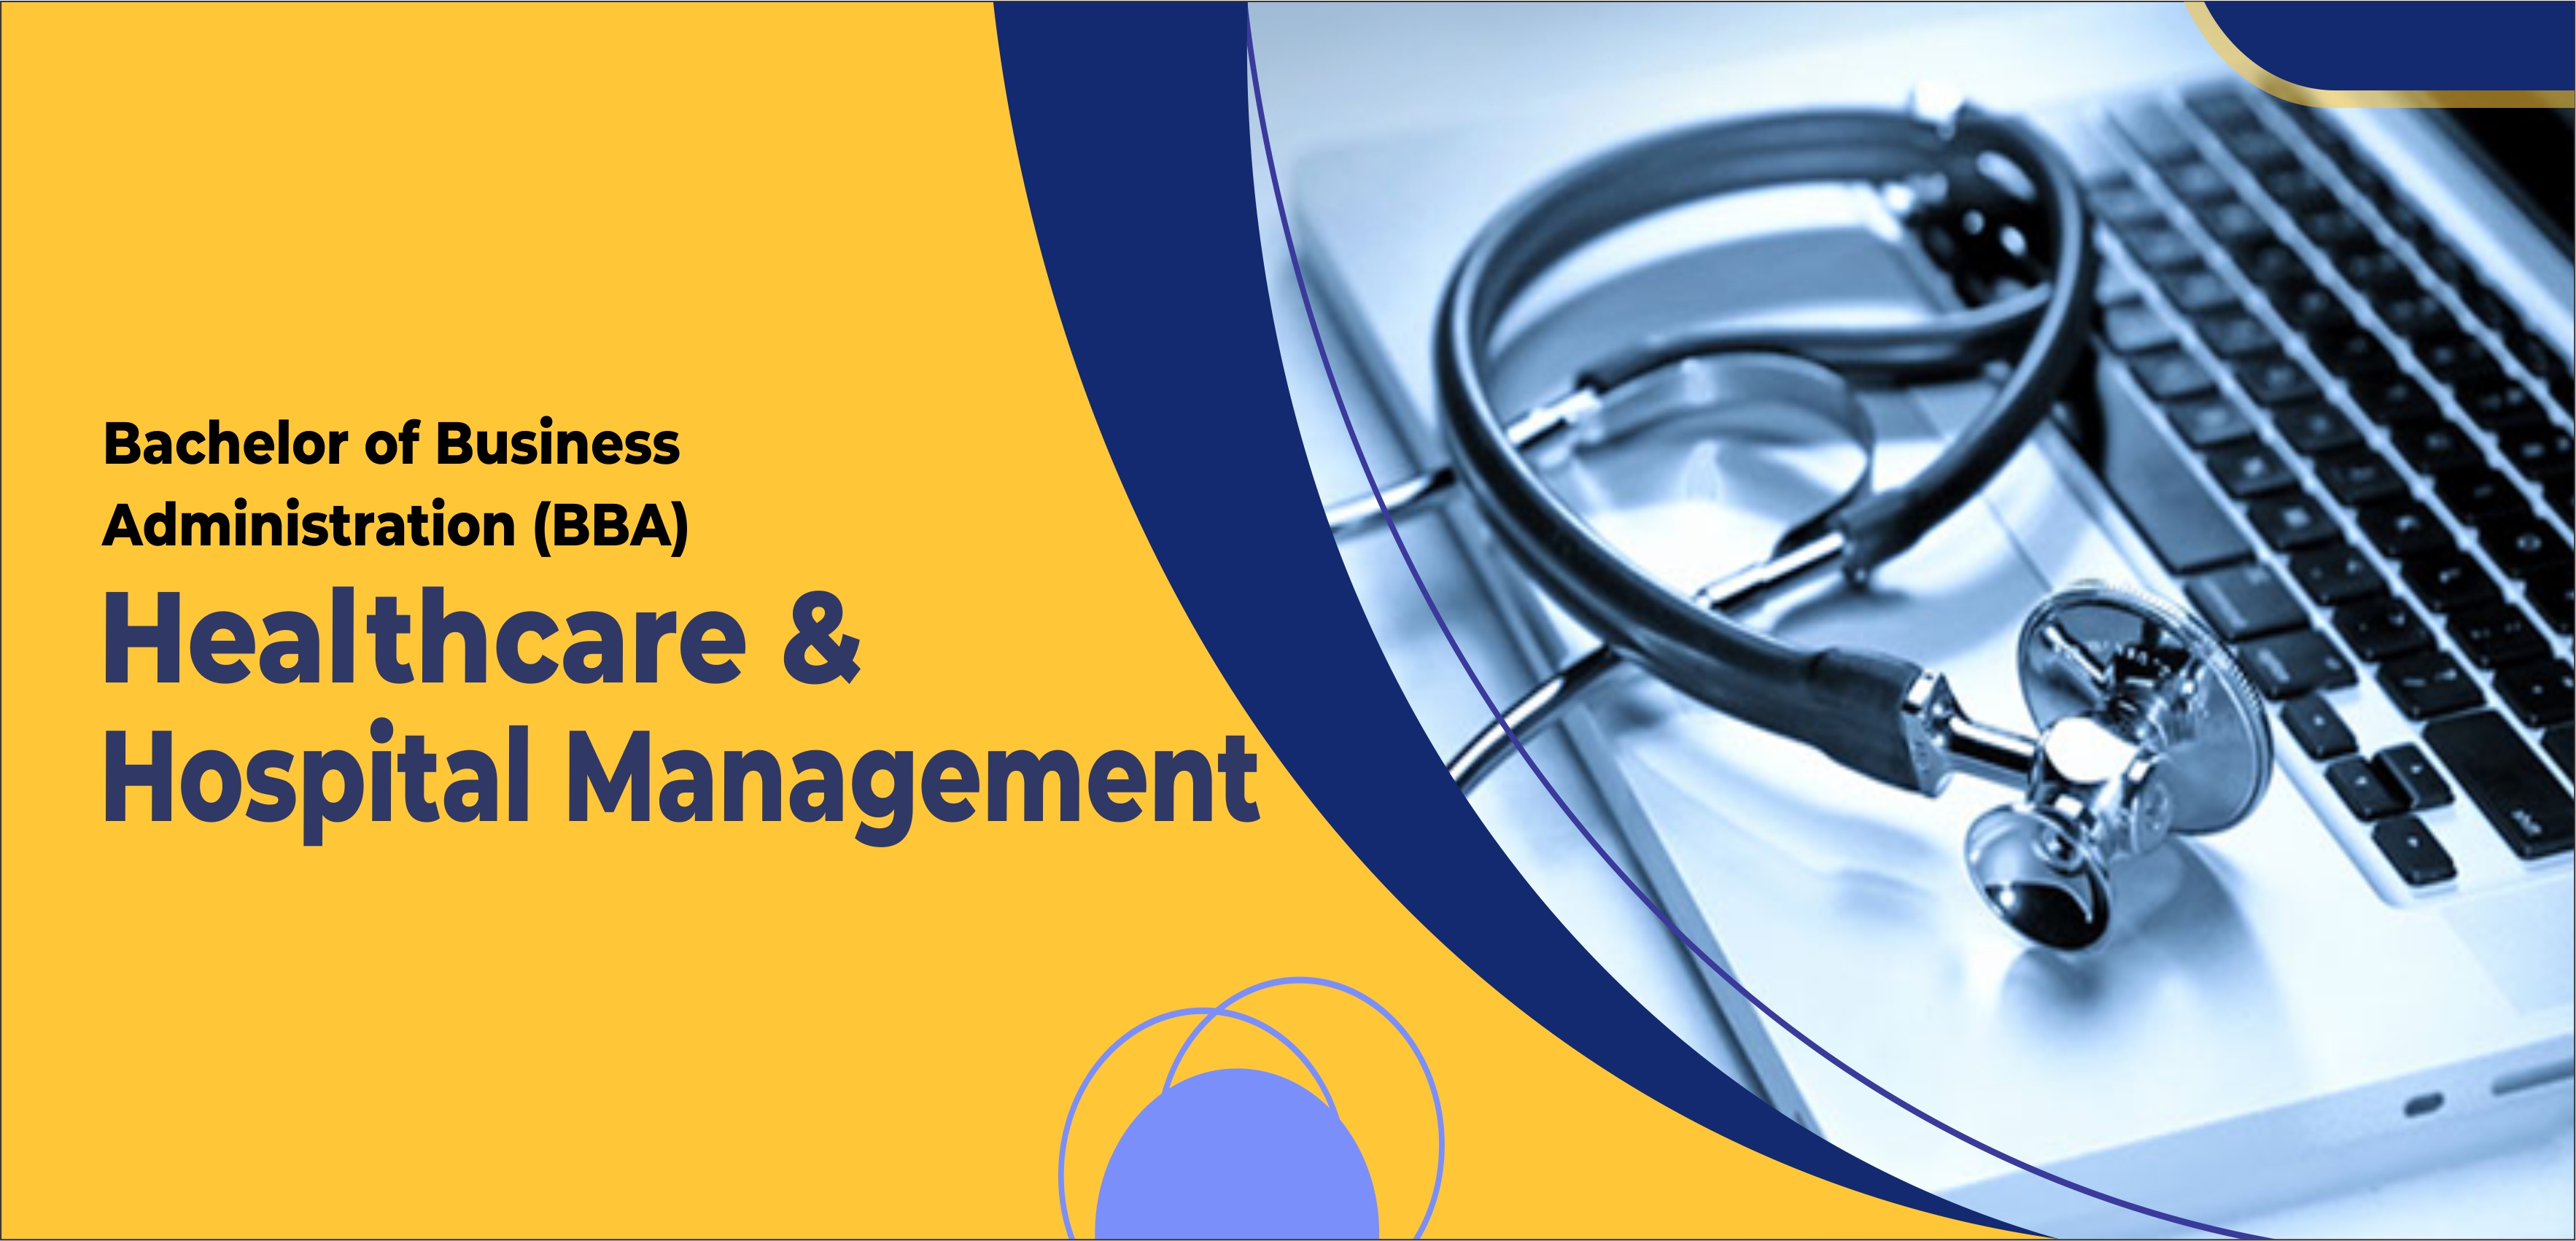 BBA - Bachelor of Business Administration (Healthcare & Hospital Management)